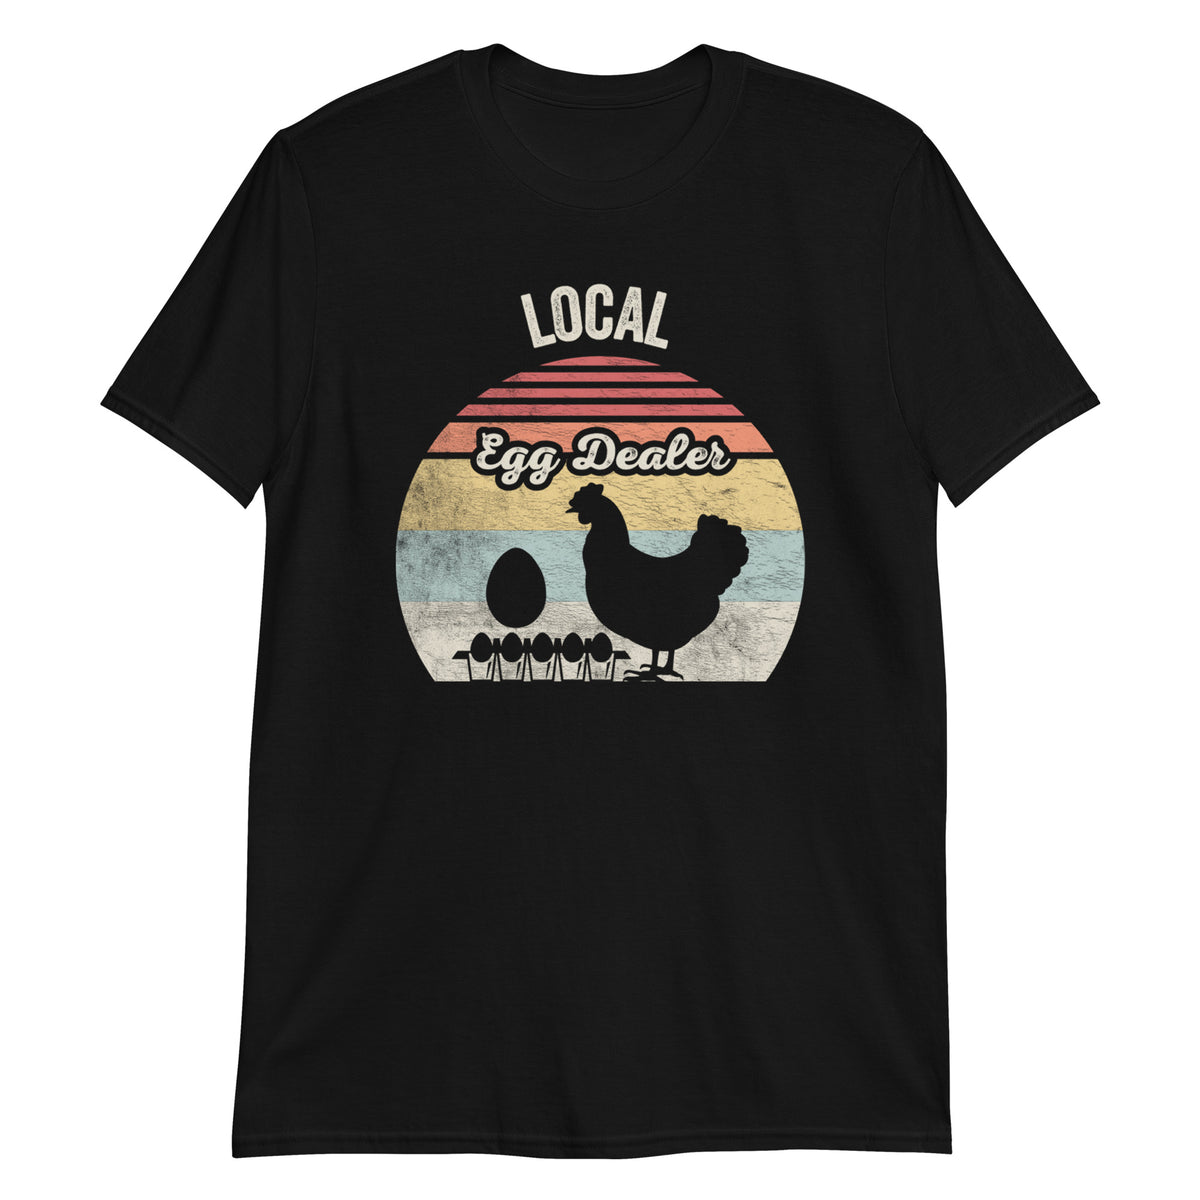 Support Your Local Egg Dealer T-Shirt